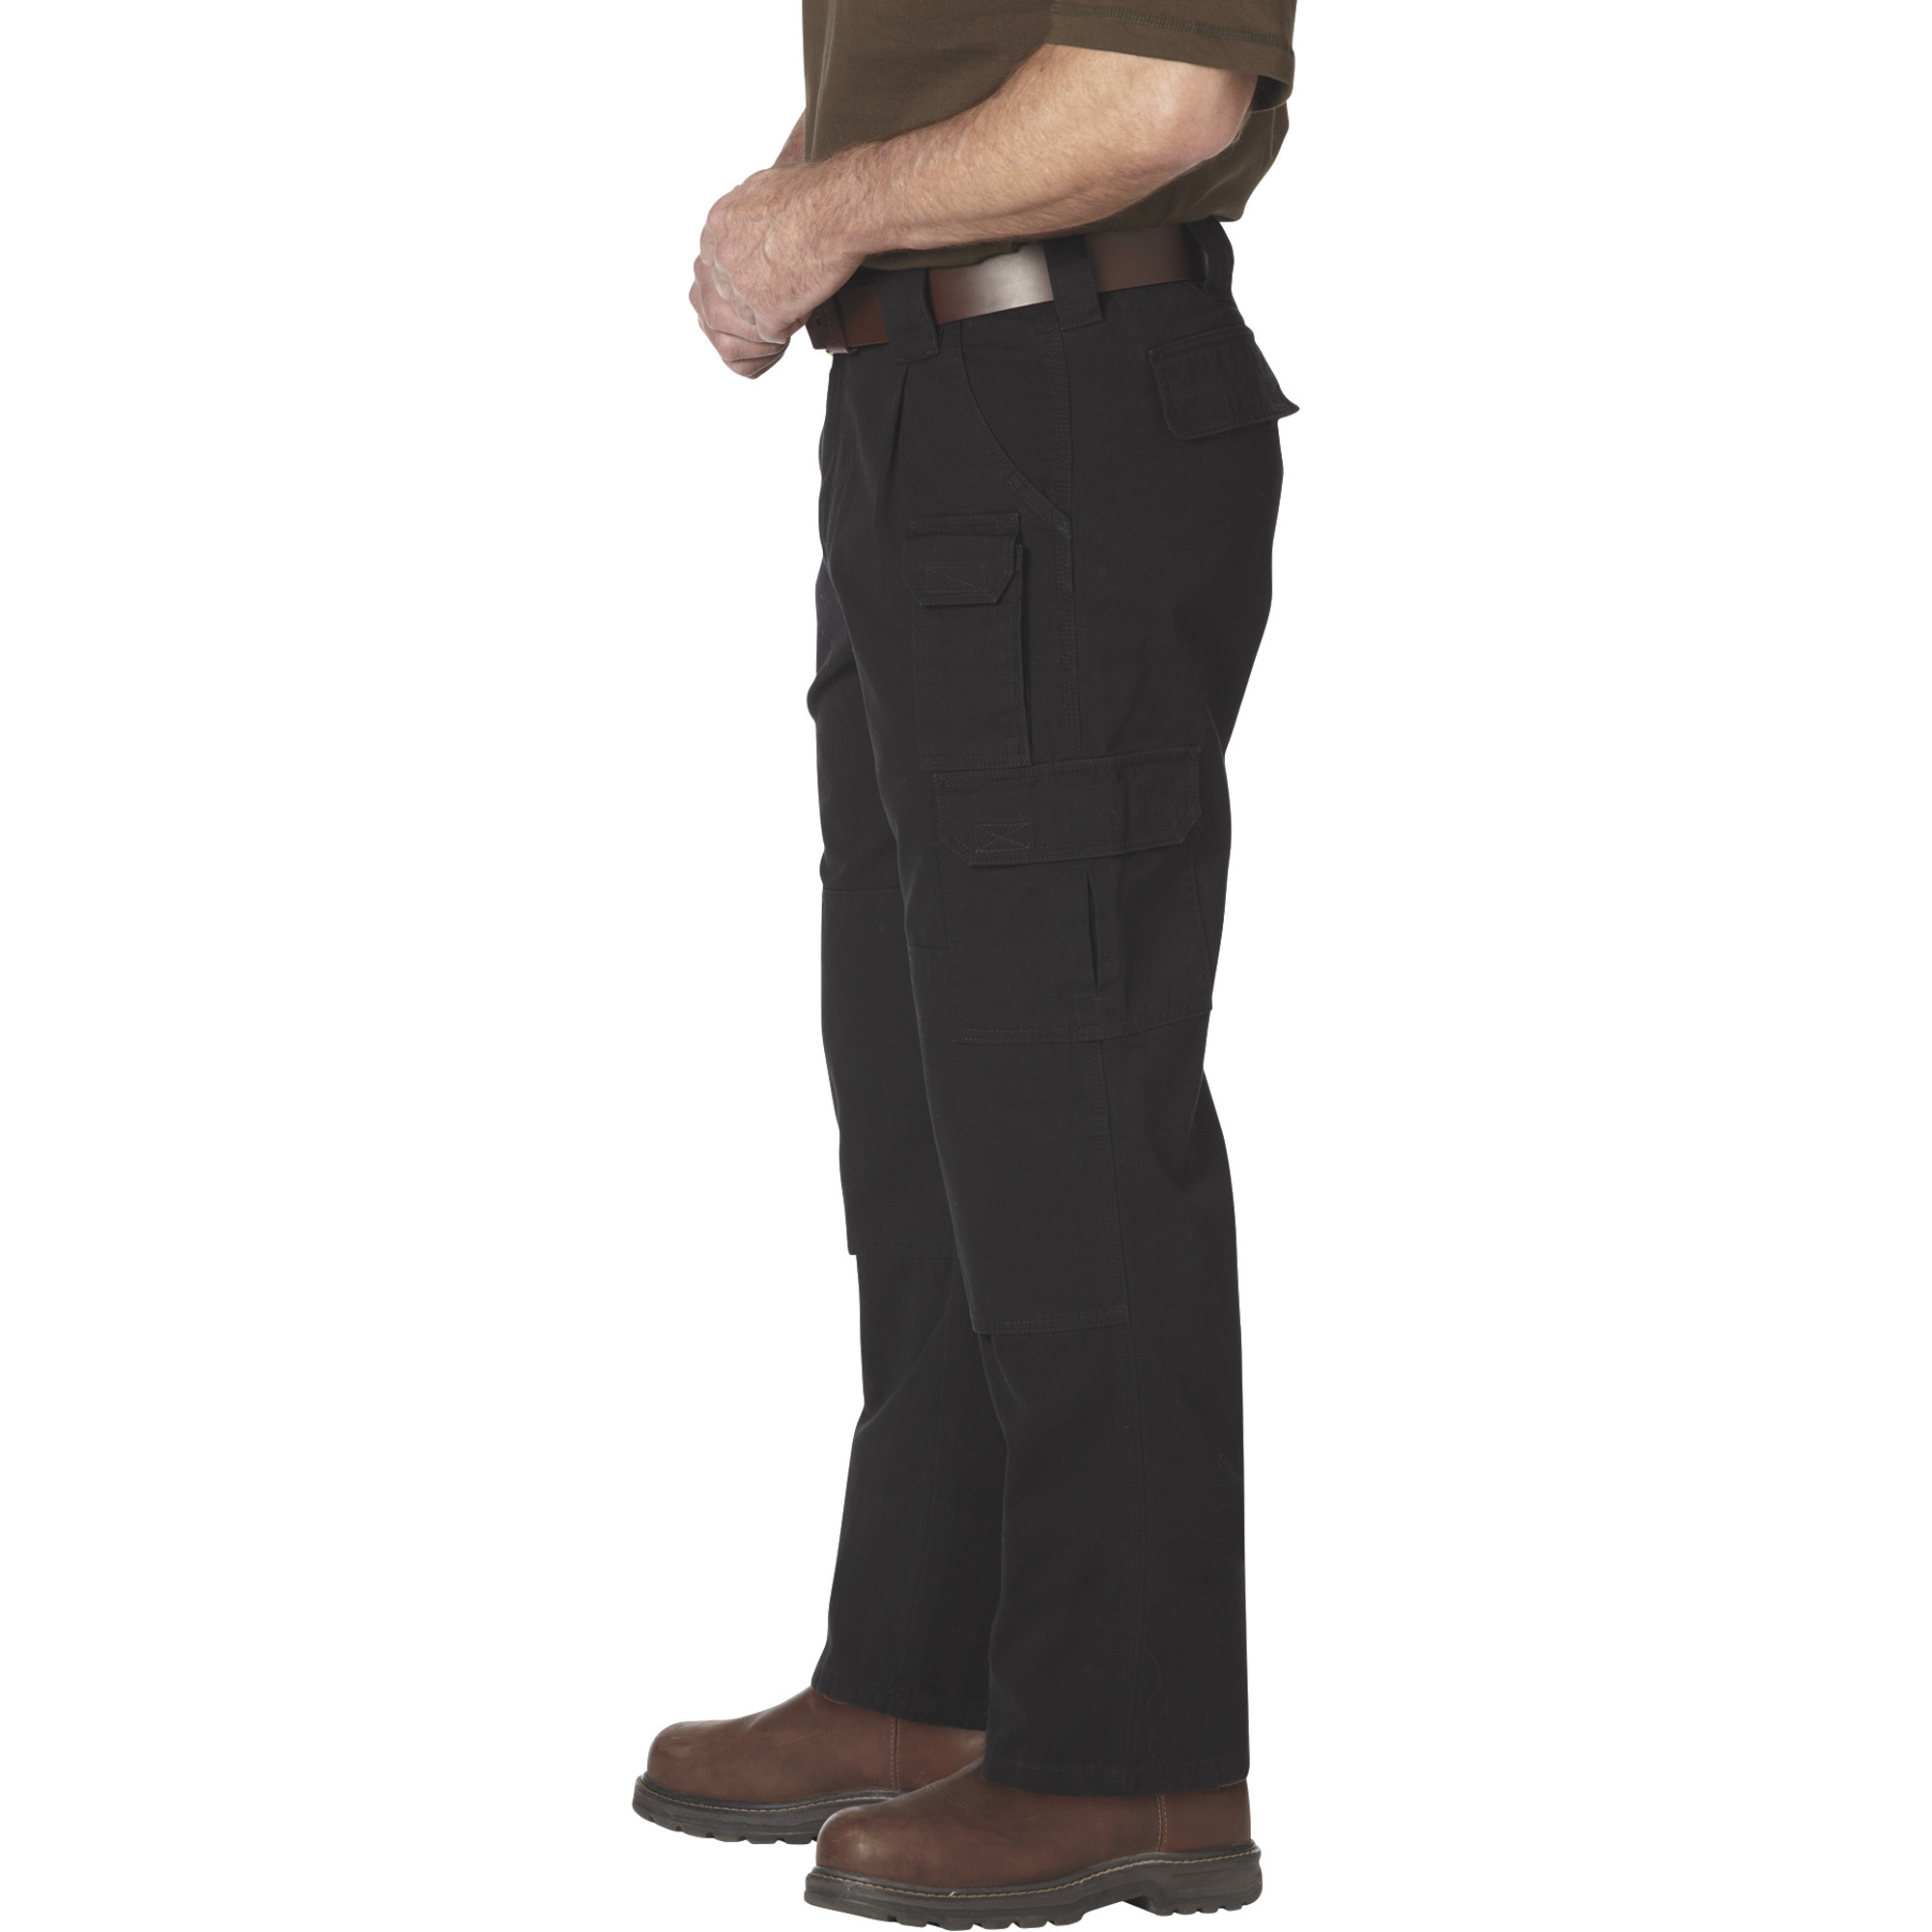 Gravel Gear Men's 7-Pocket Tactical Pants with Teflon - Black, 34Inch Waist x 32Inch Inseam